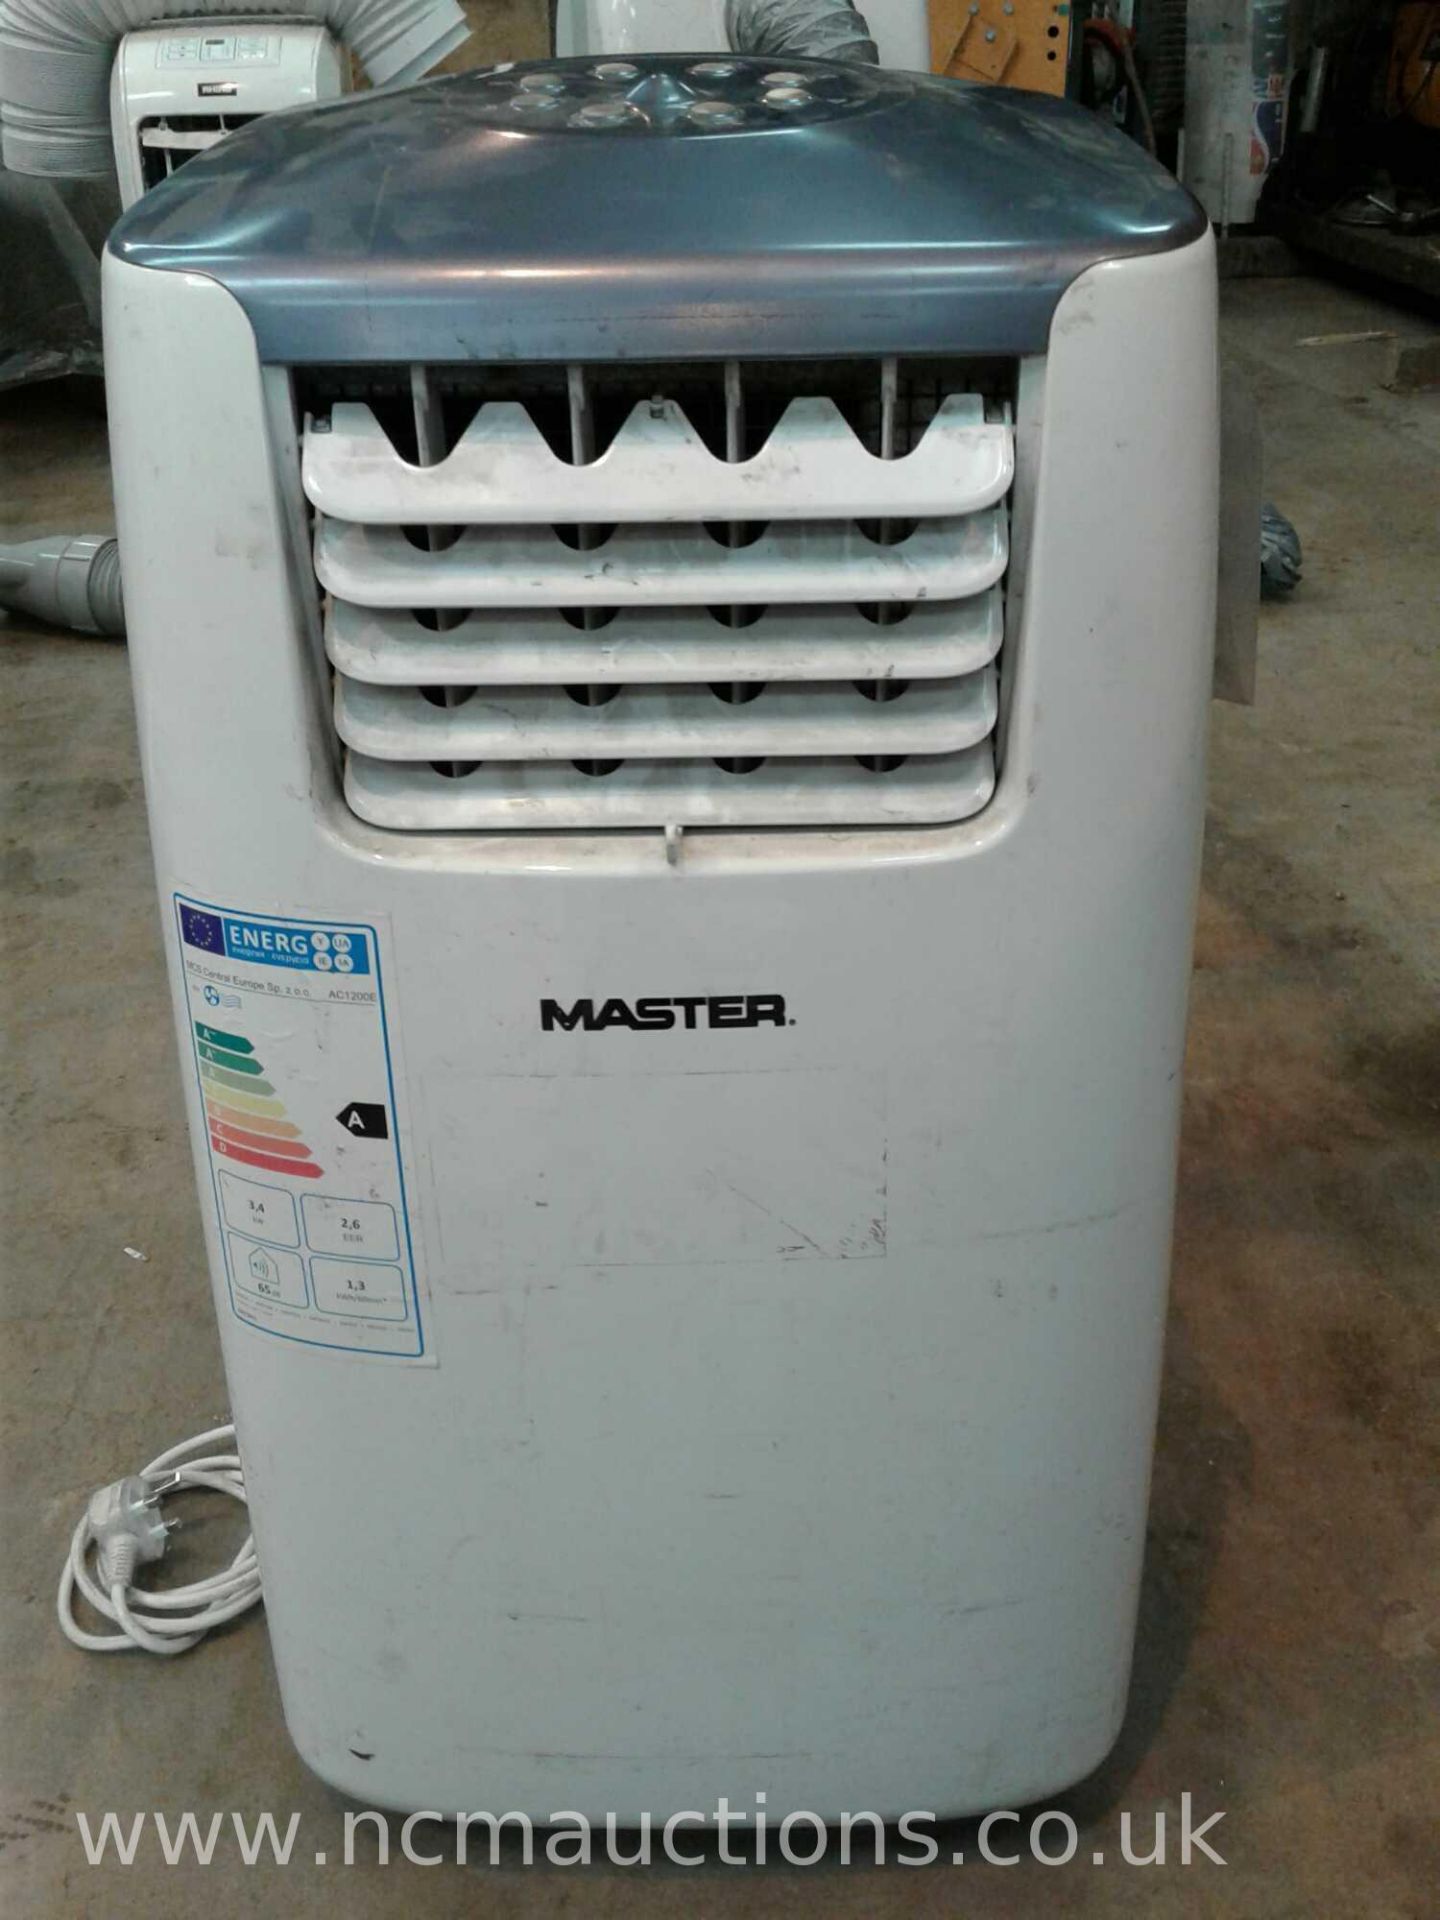 Master air conditioning unit